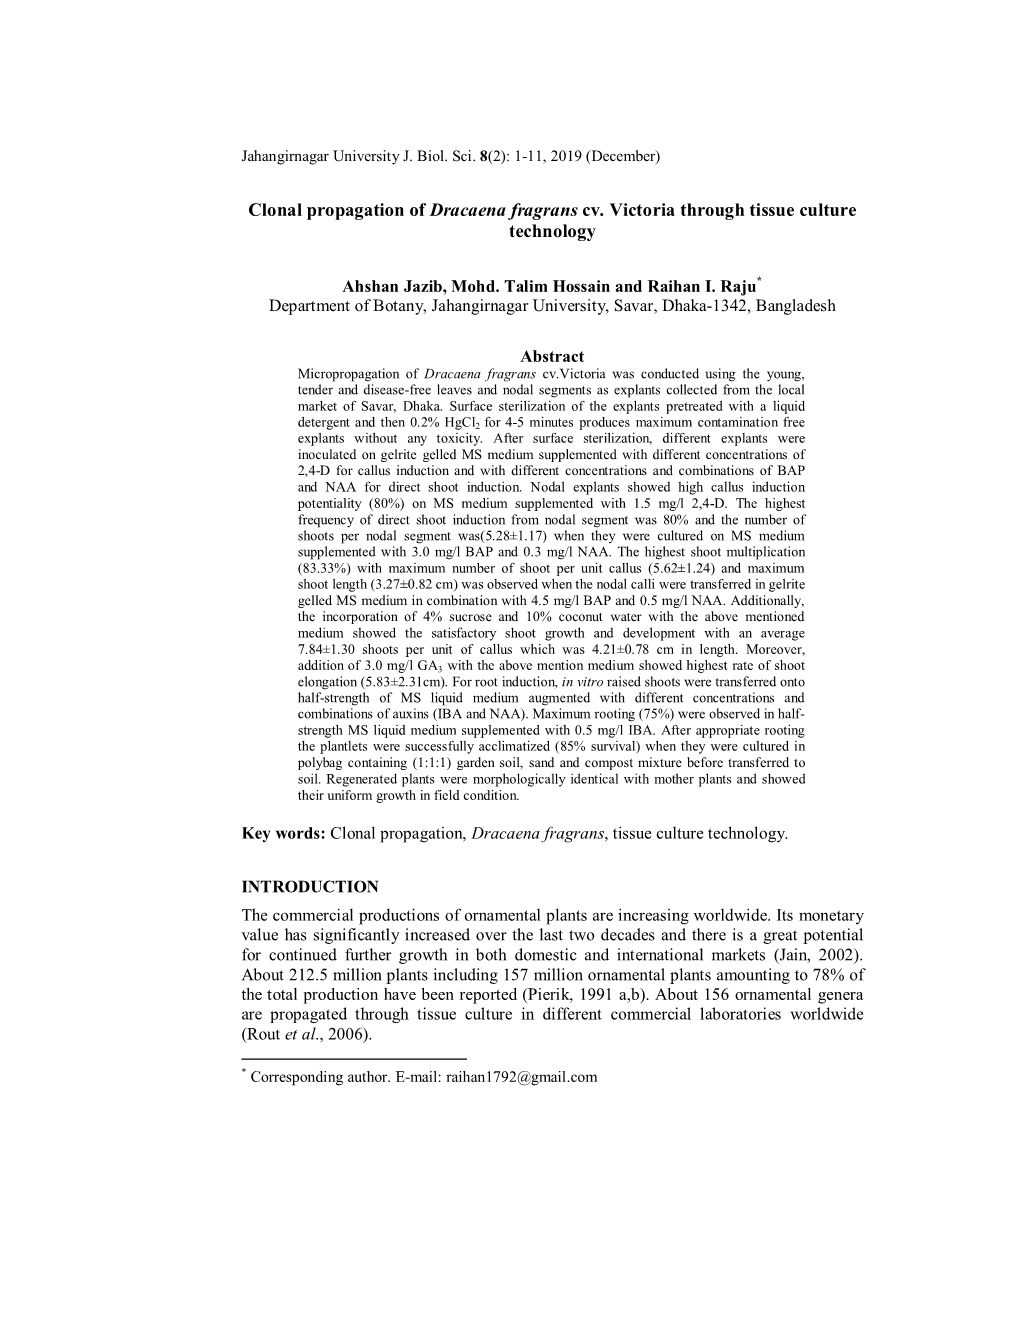 Clonal Propagation of Dracaena Fragrans Cv. Victoria Through Tissue Culture Technology